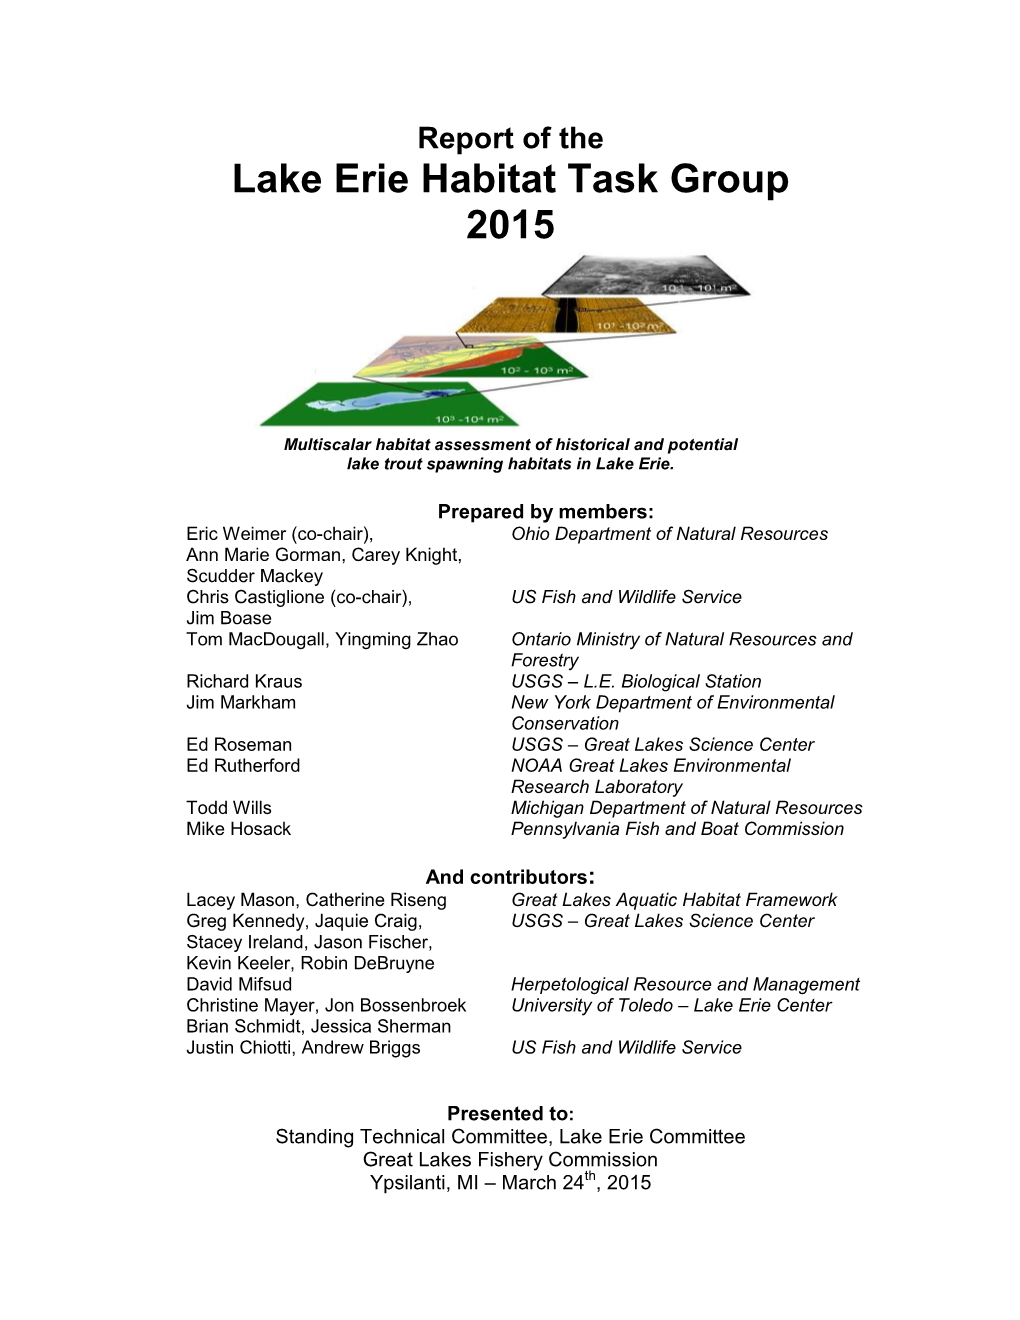 Lake Erie Habitat Task Group 2015